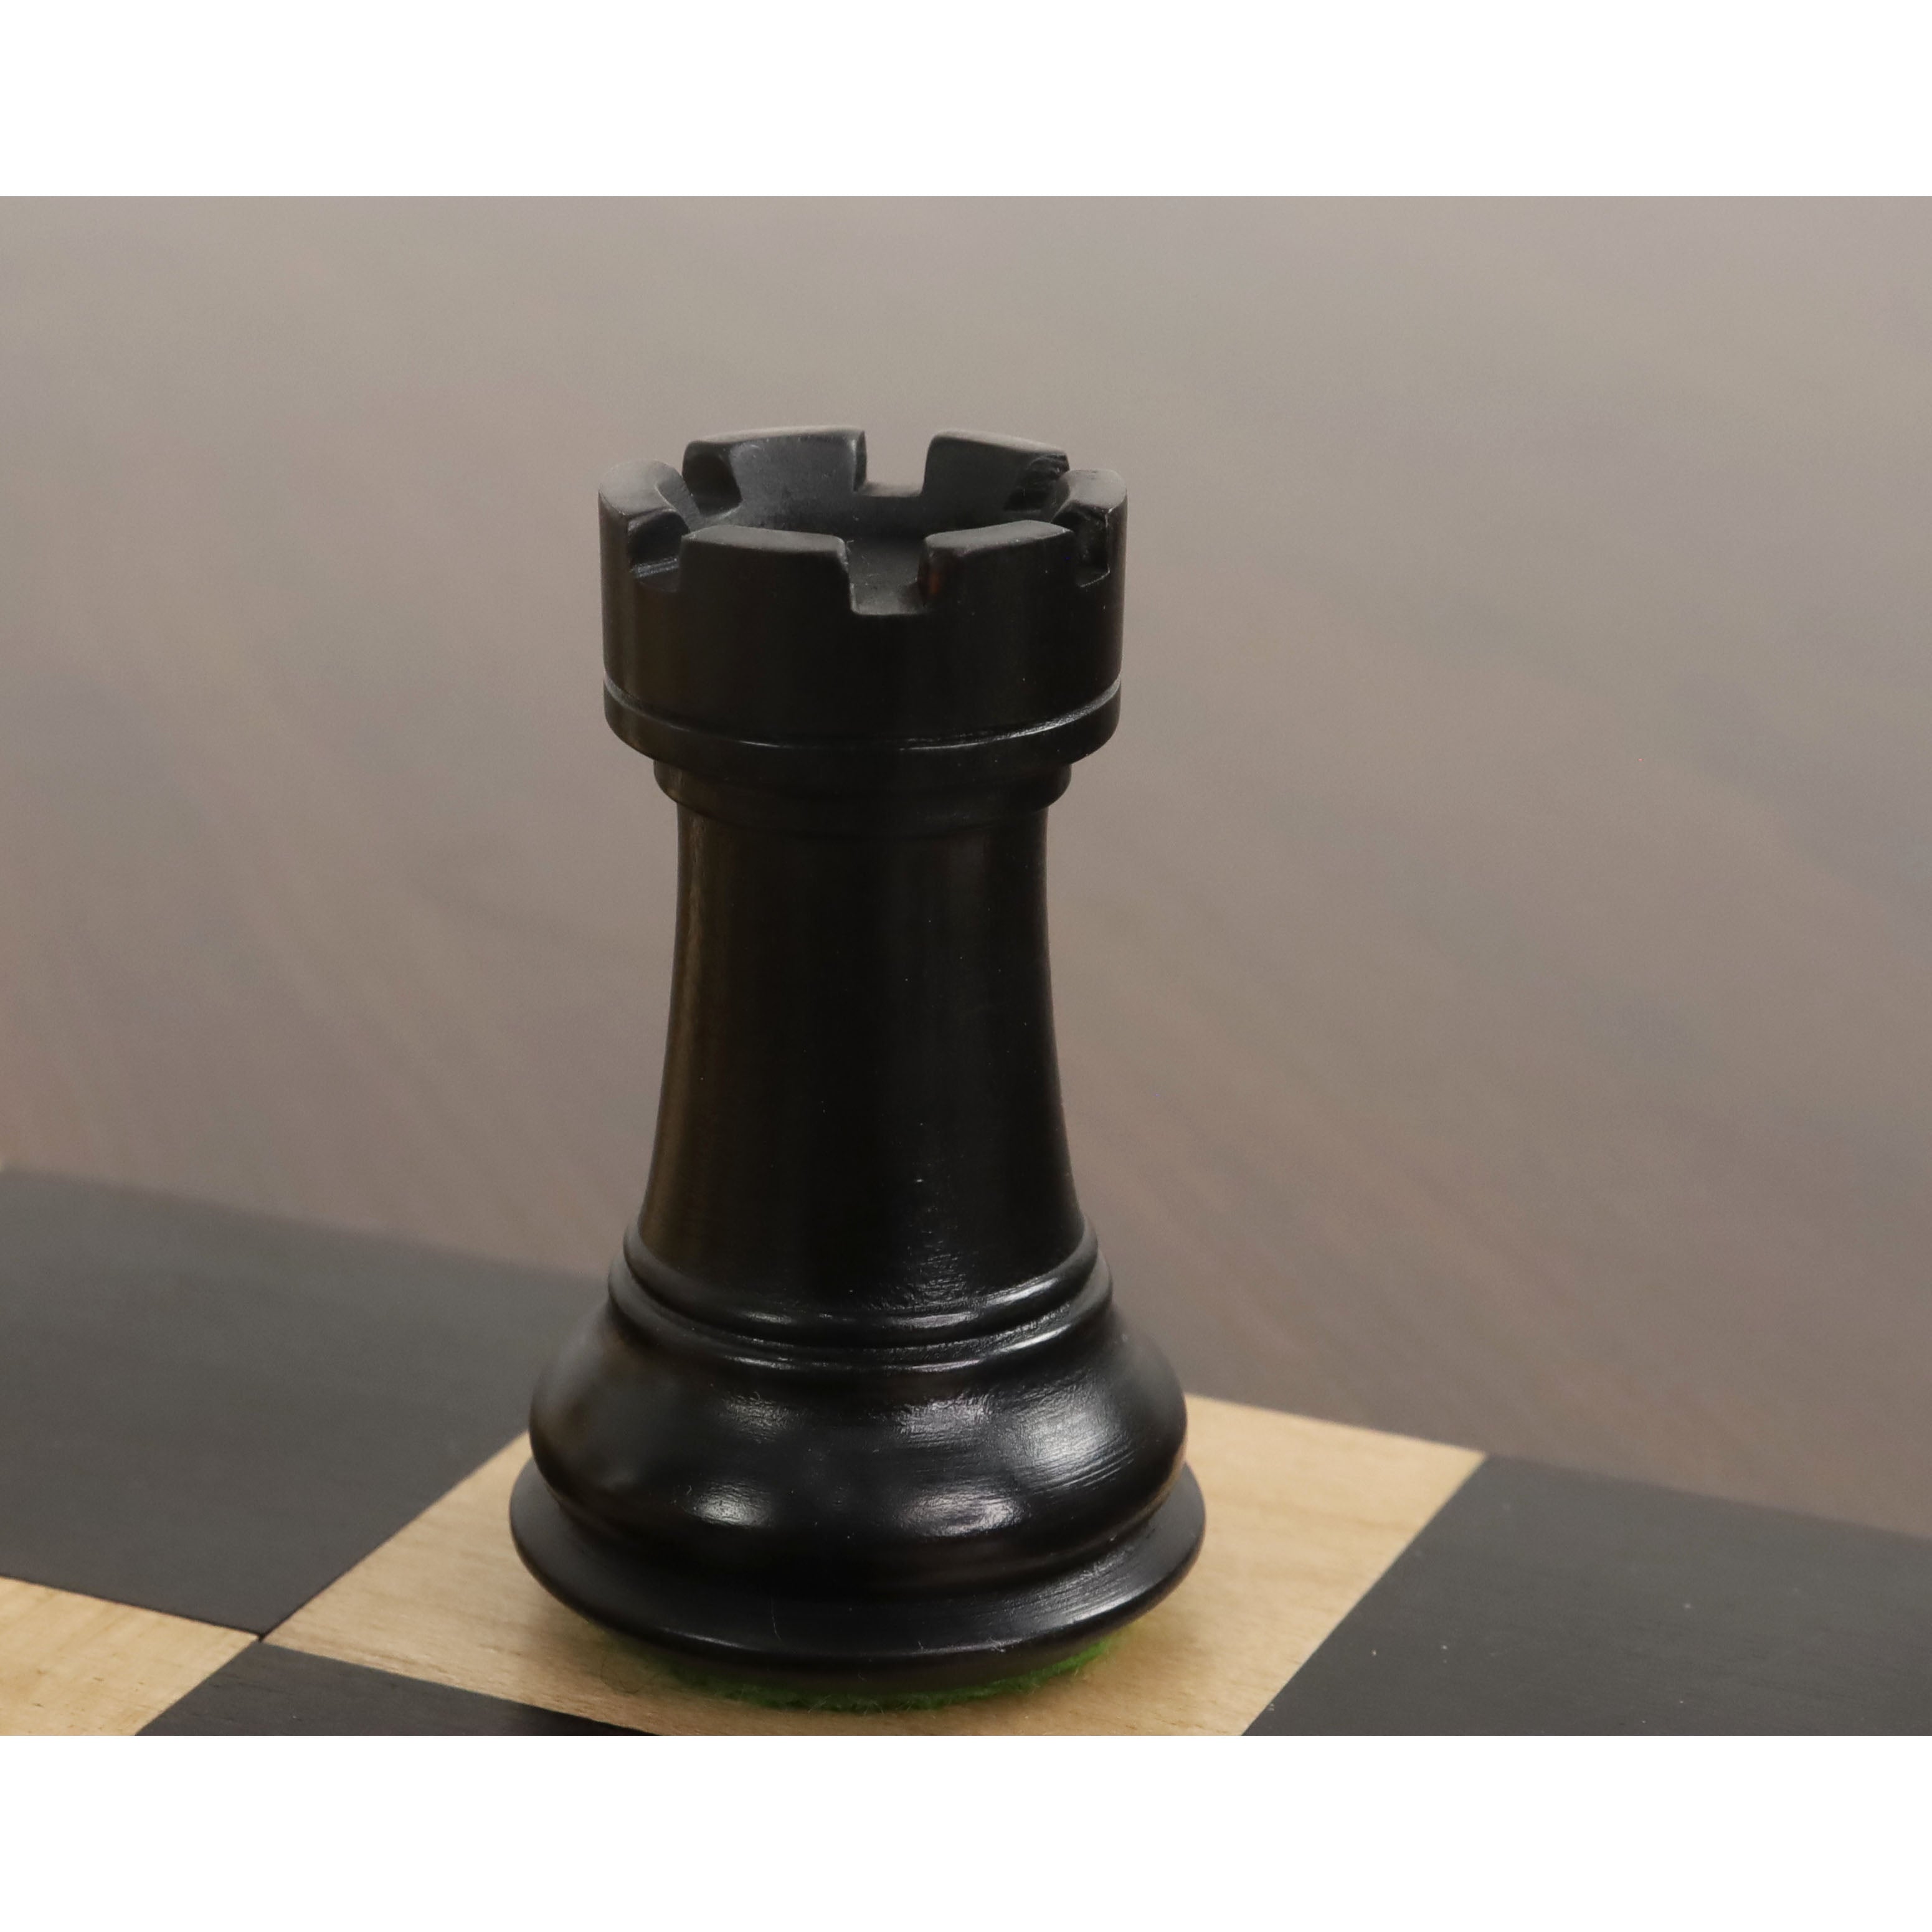 Black Rook Chess Piece Button